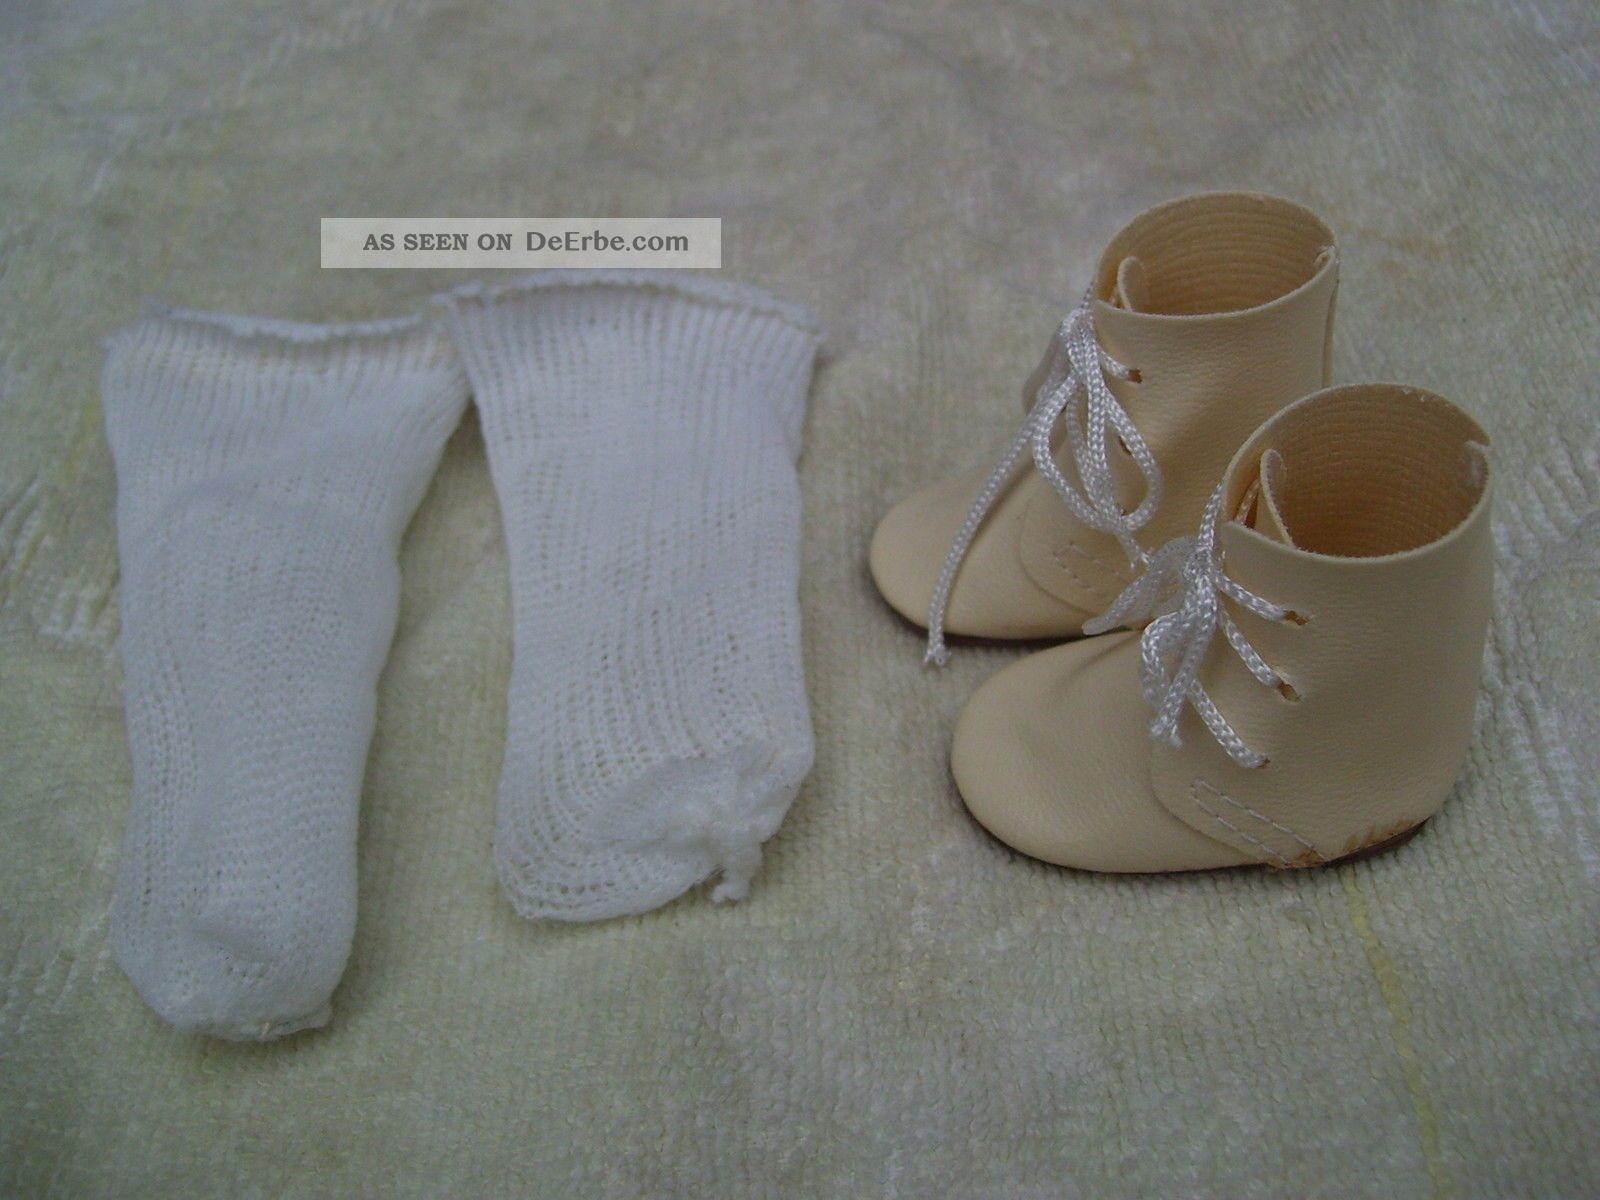 Alte Puppenkleidung Schuhe Vintage Creme Boots Shoes White Socks 40 Cm Doll 5 Cm Original, gefertigt vor 1970 Bild